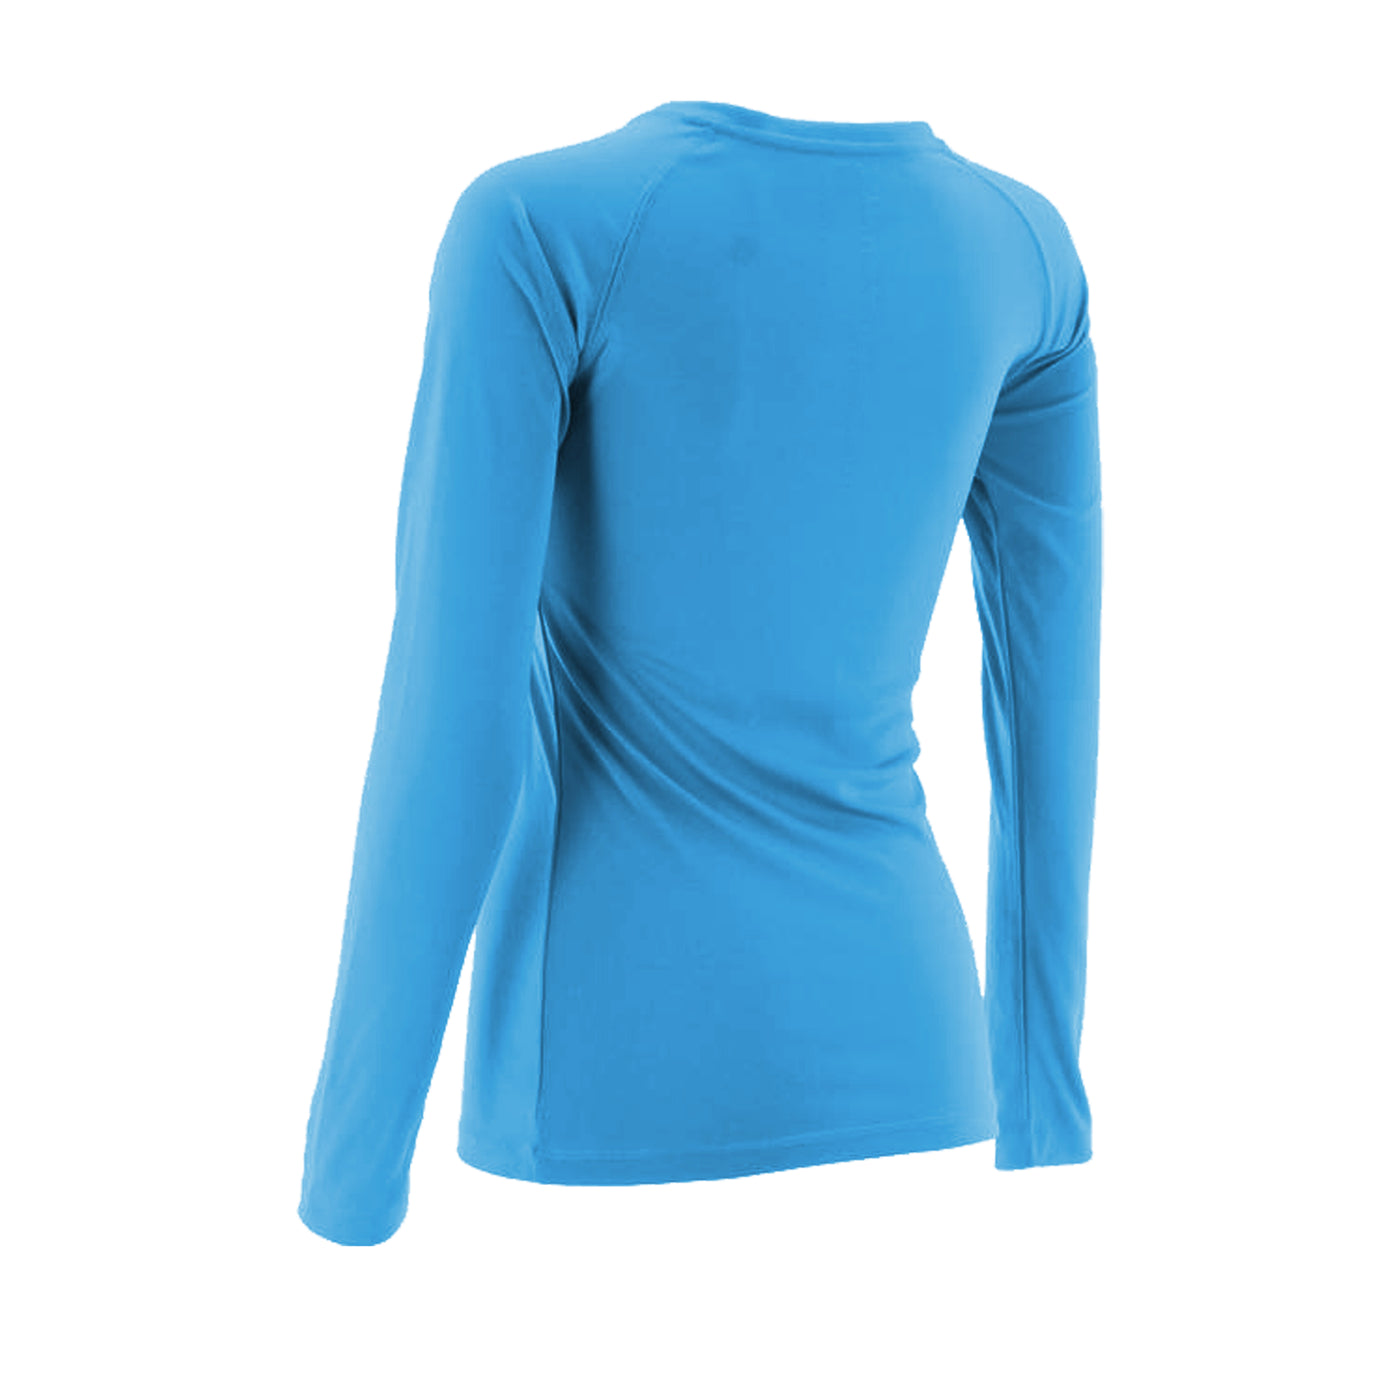 Columbia Blue Long Sleeve Performance Shirt - Women's